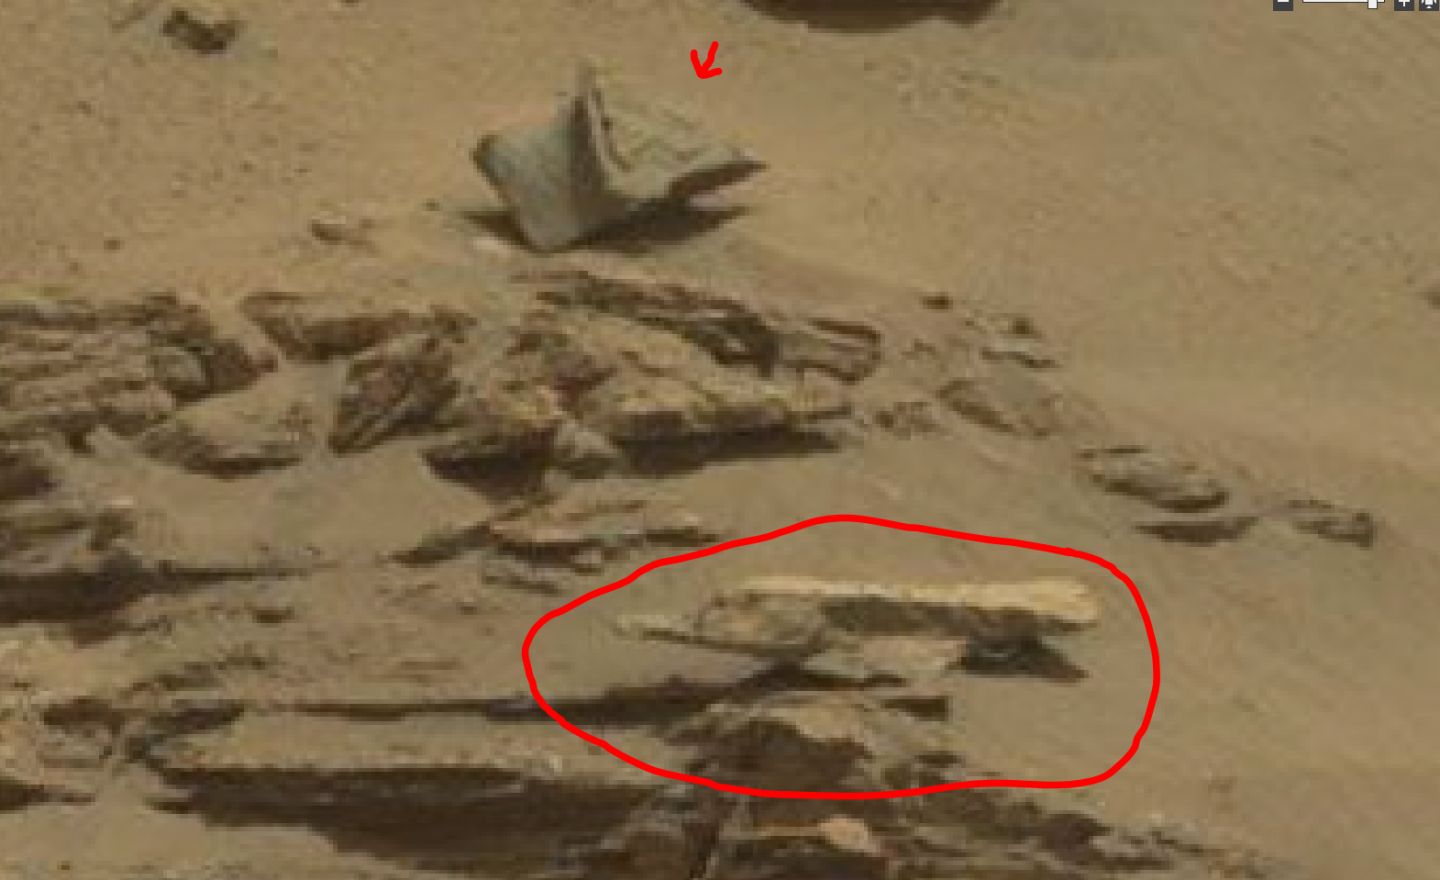 Mars anomalies - bird like stone